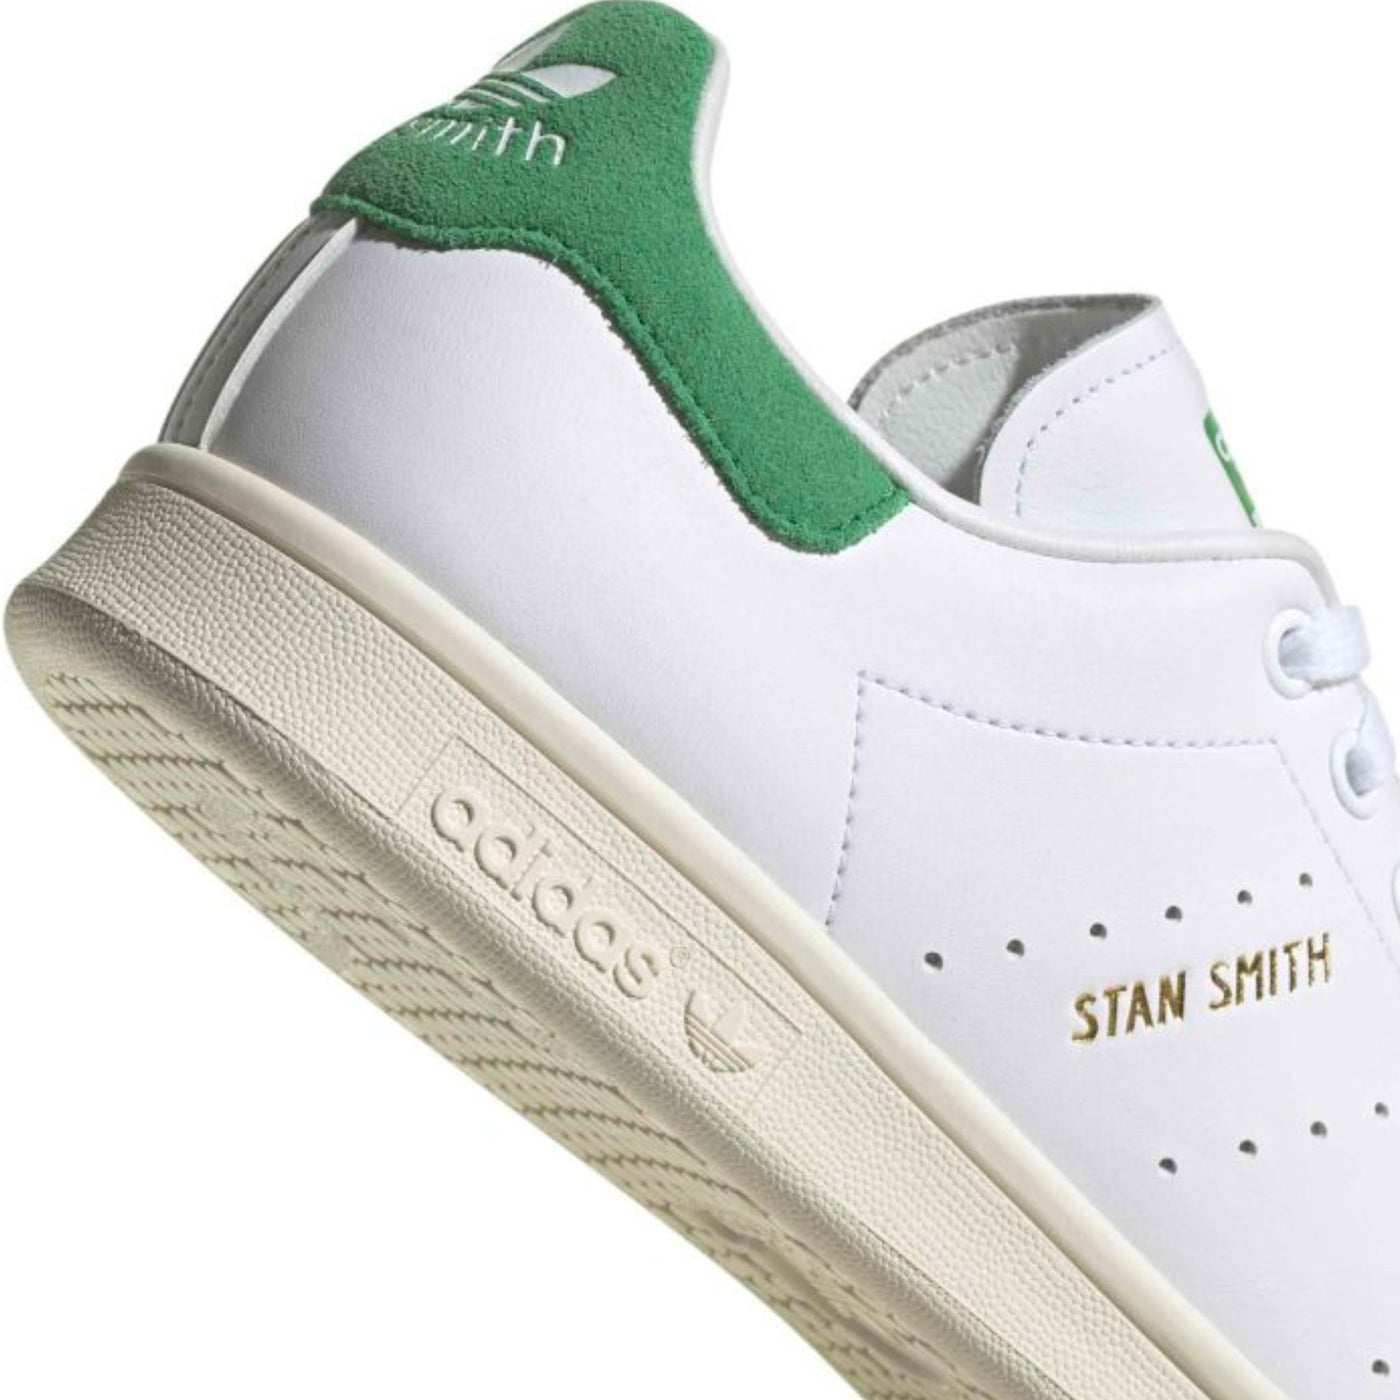 Stan Smith women's sneakers